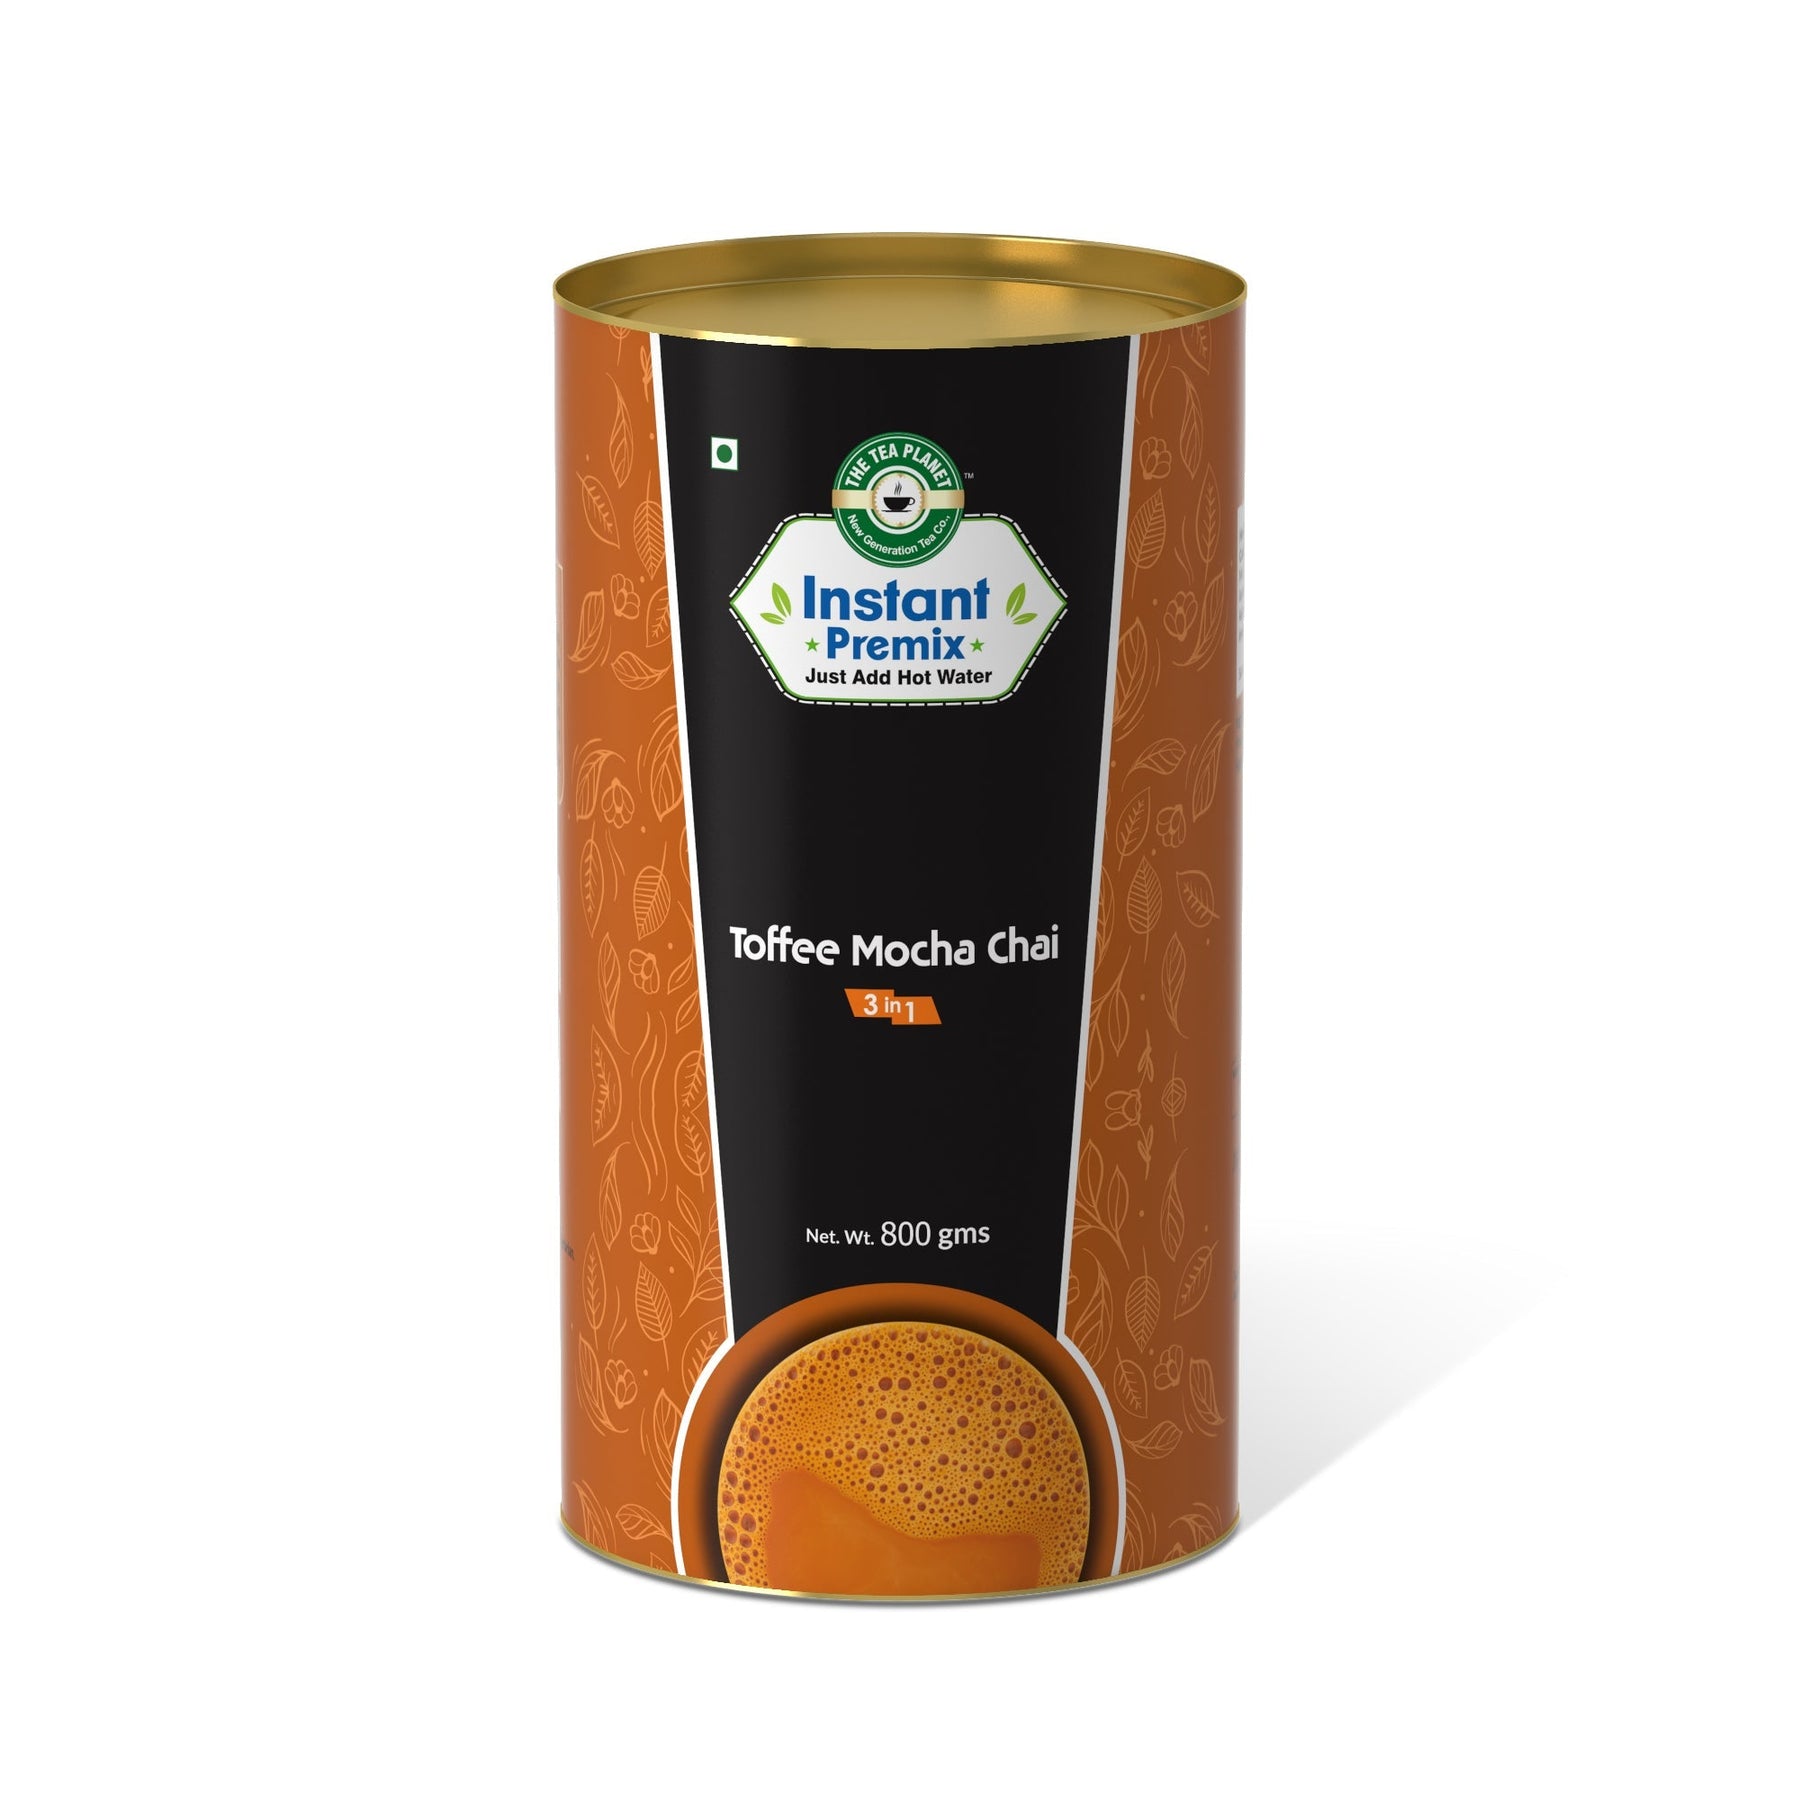 Toffee Mocha Chai Premix (3 in 1) - 800 gms